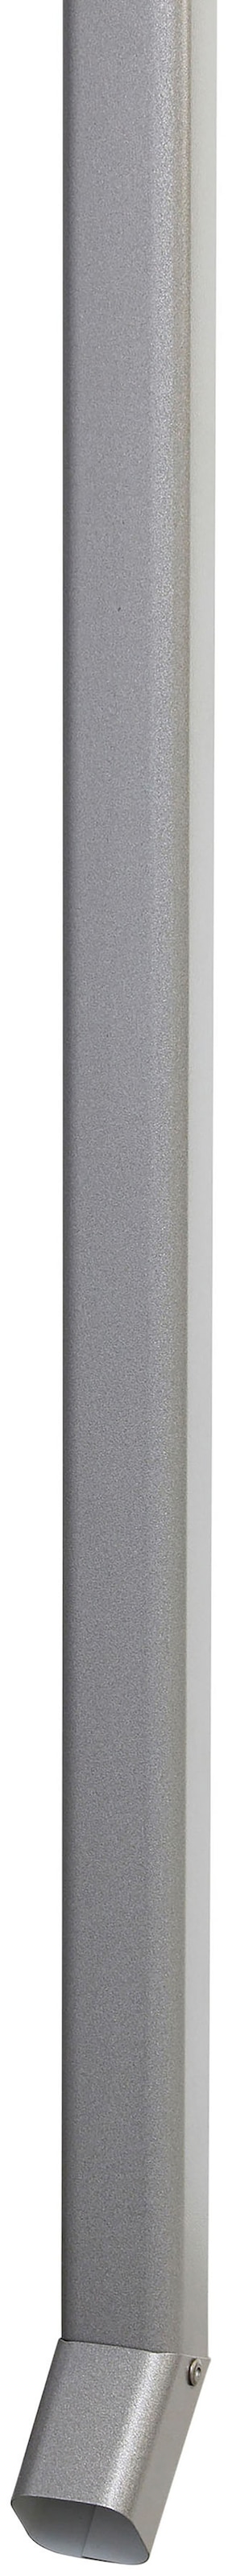 Biohort Regenfallrohr, (Set, 2 tlg.), für Gerätehaus HighLine, aus feuerverzinktem Stahl